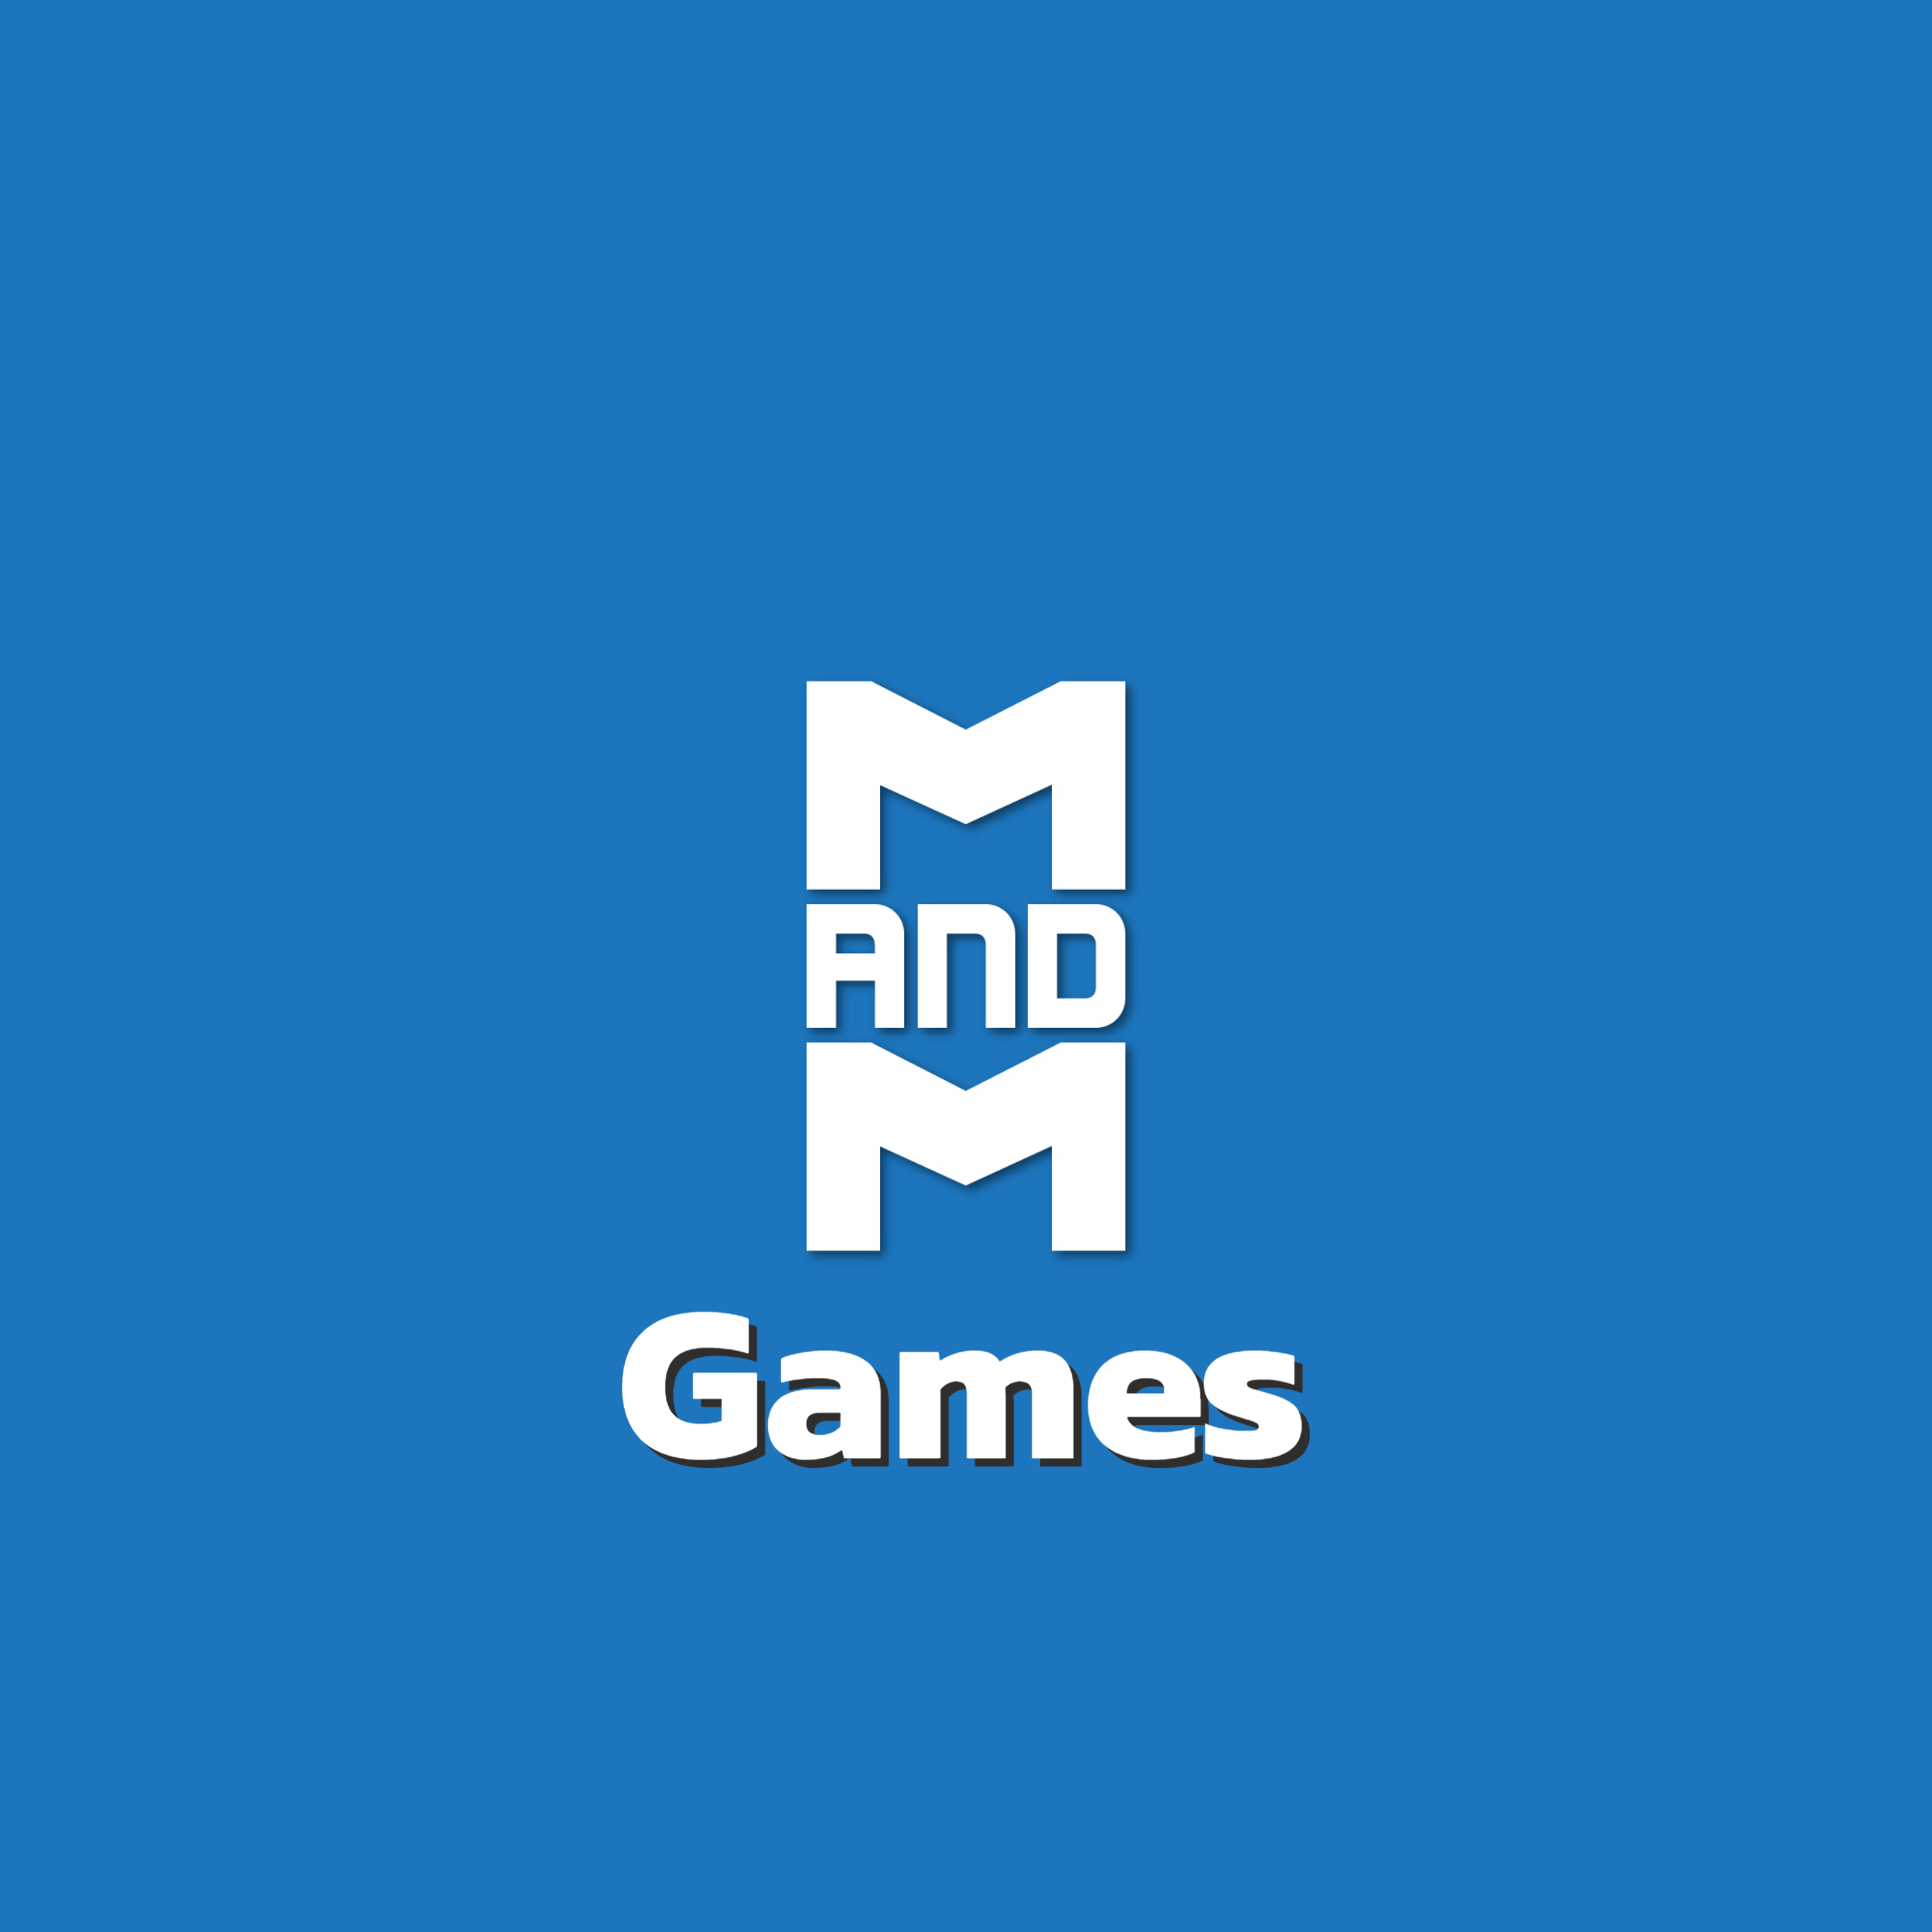 https://gaming.membersandmodels.com/wp-content/uploads/2022/11/MemoGames.png 